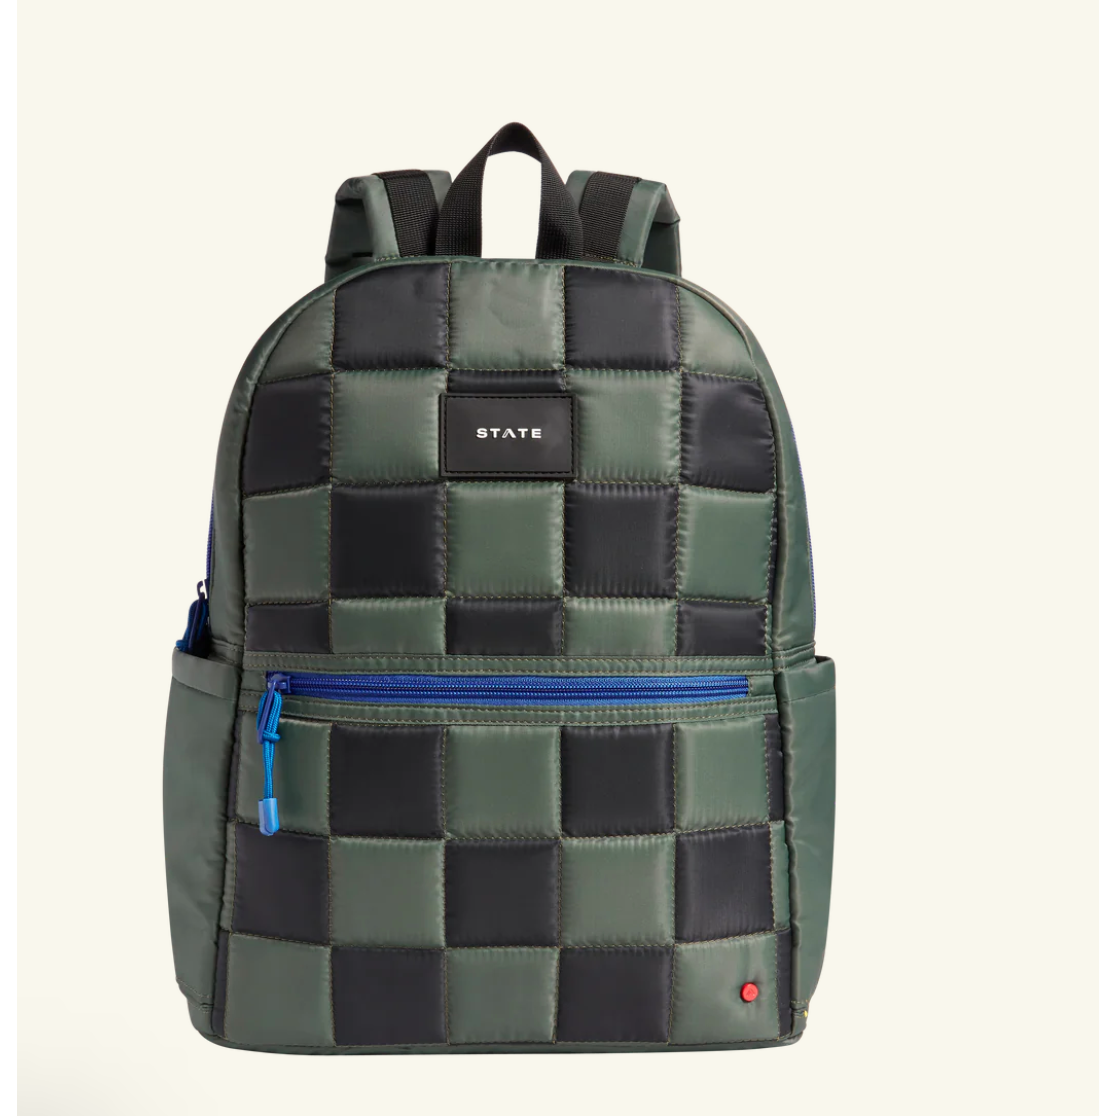 kane kids double pocket backpack | puffer checkerborad